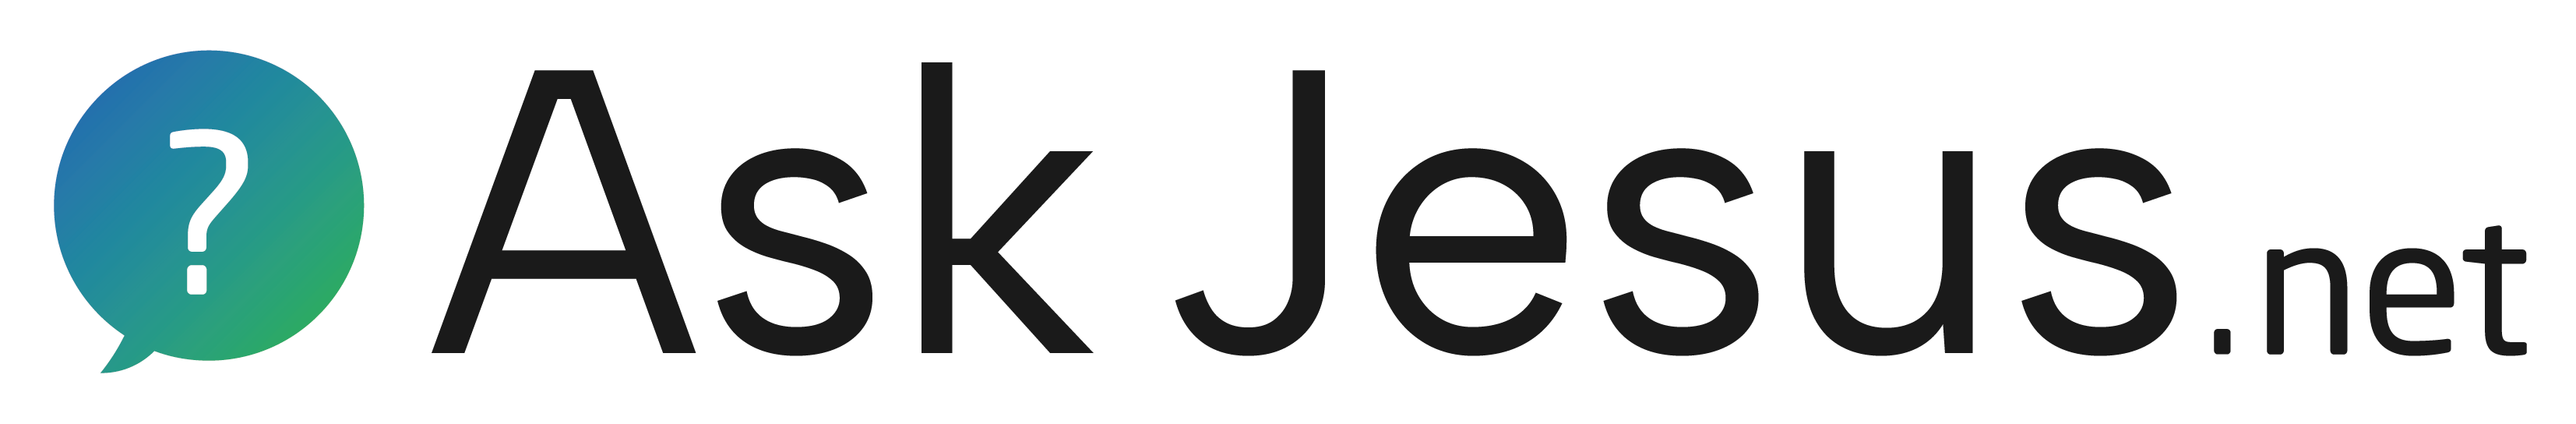 askjesus.net logo